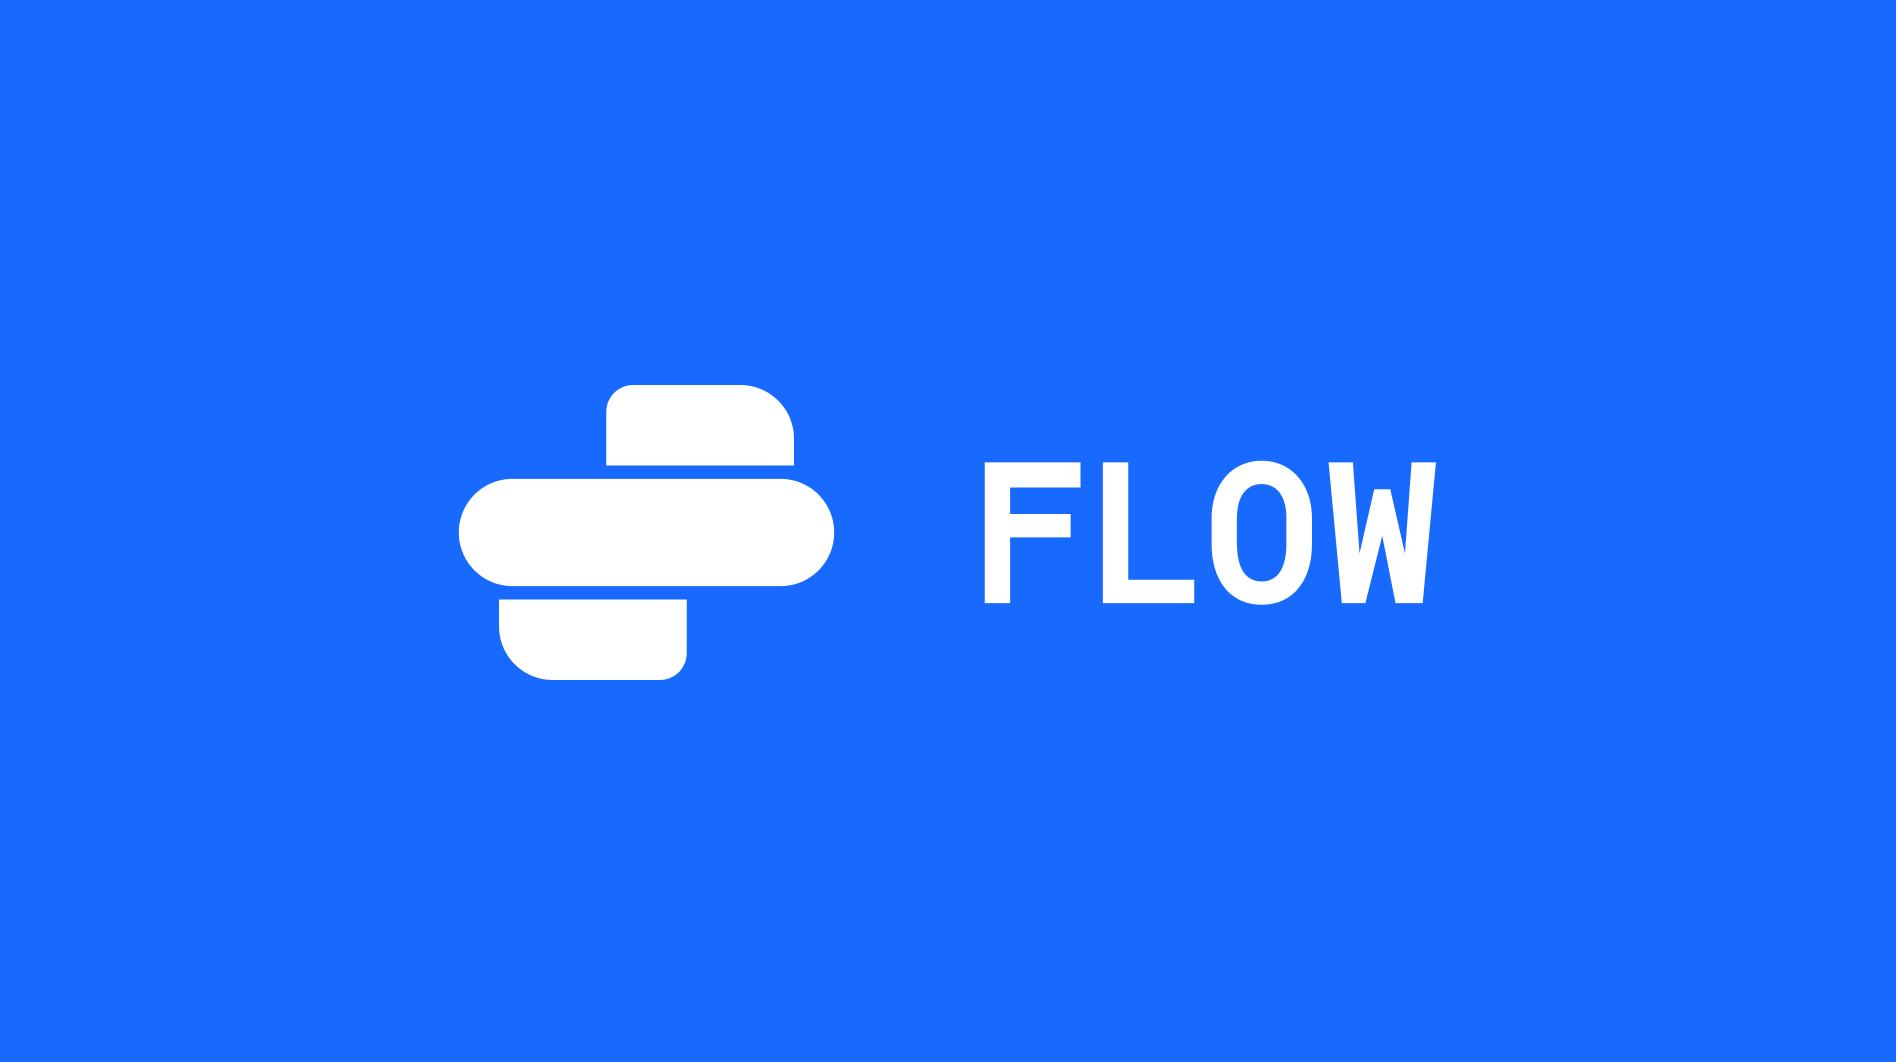 flow by Checkout.com